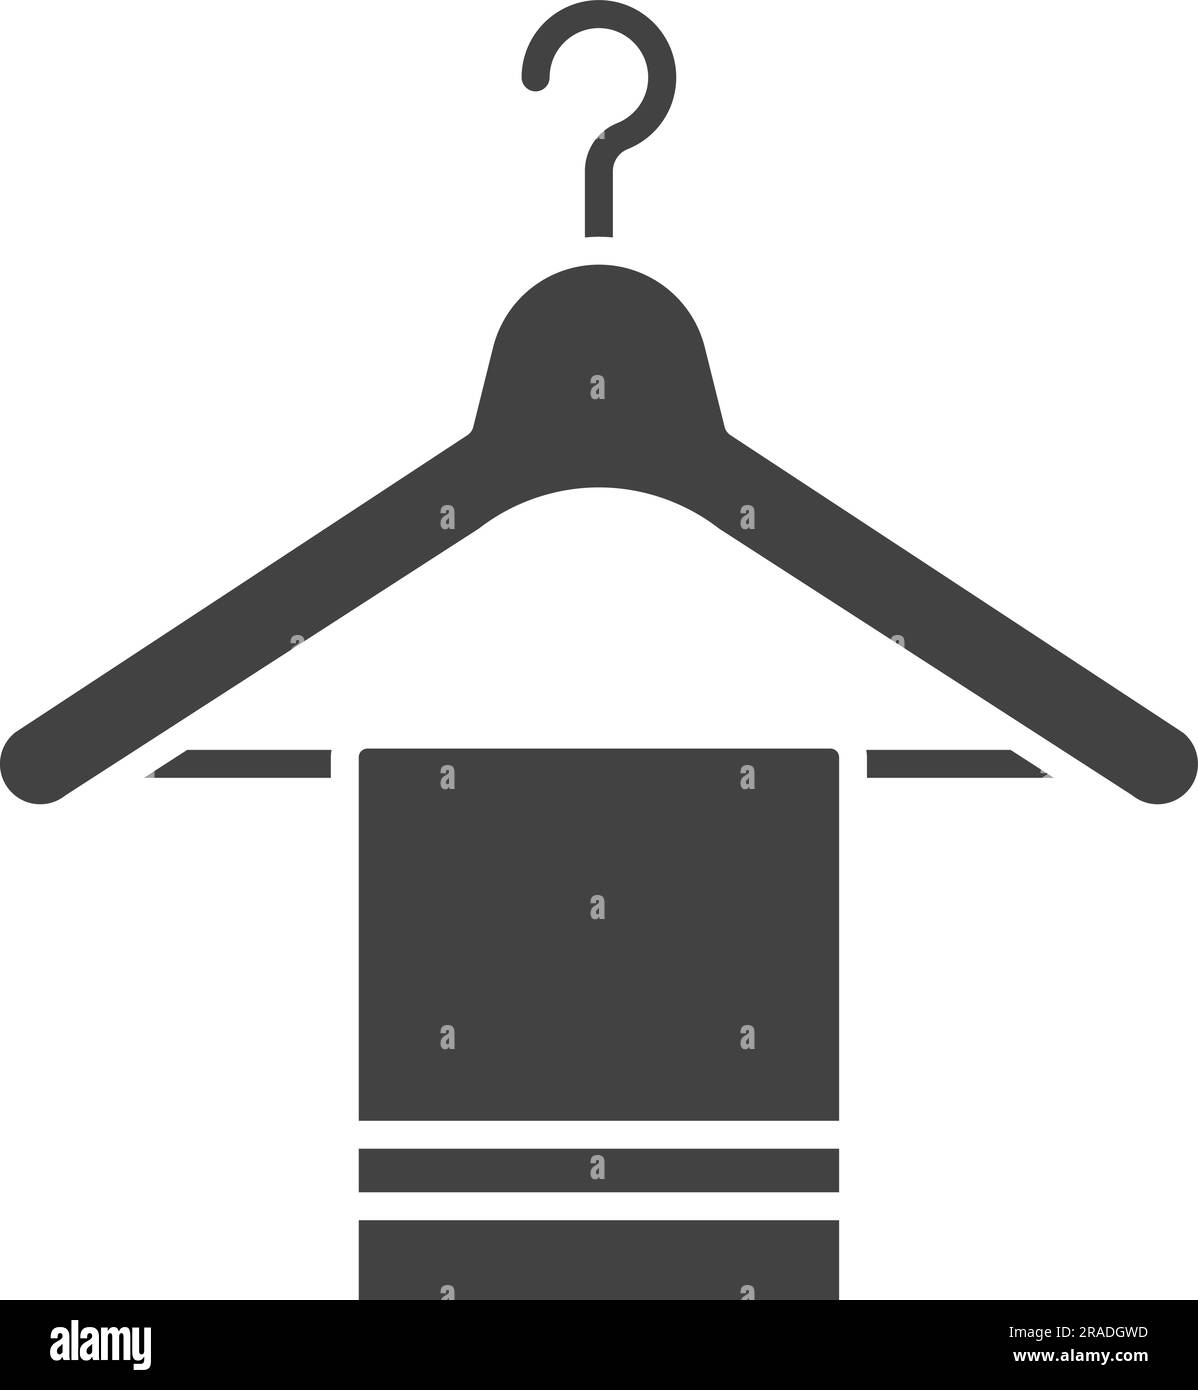 Cloth Hanger Icon Image. Stock Vector